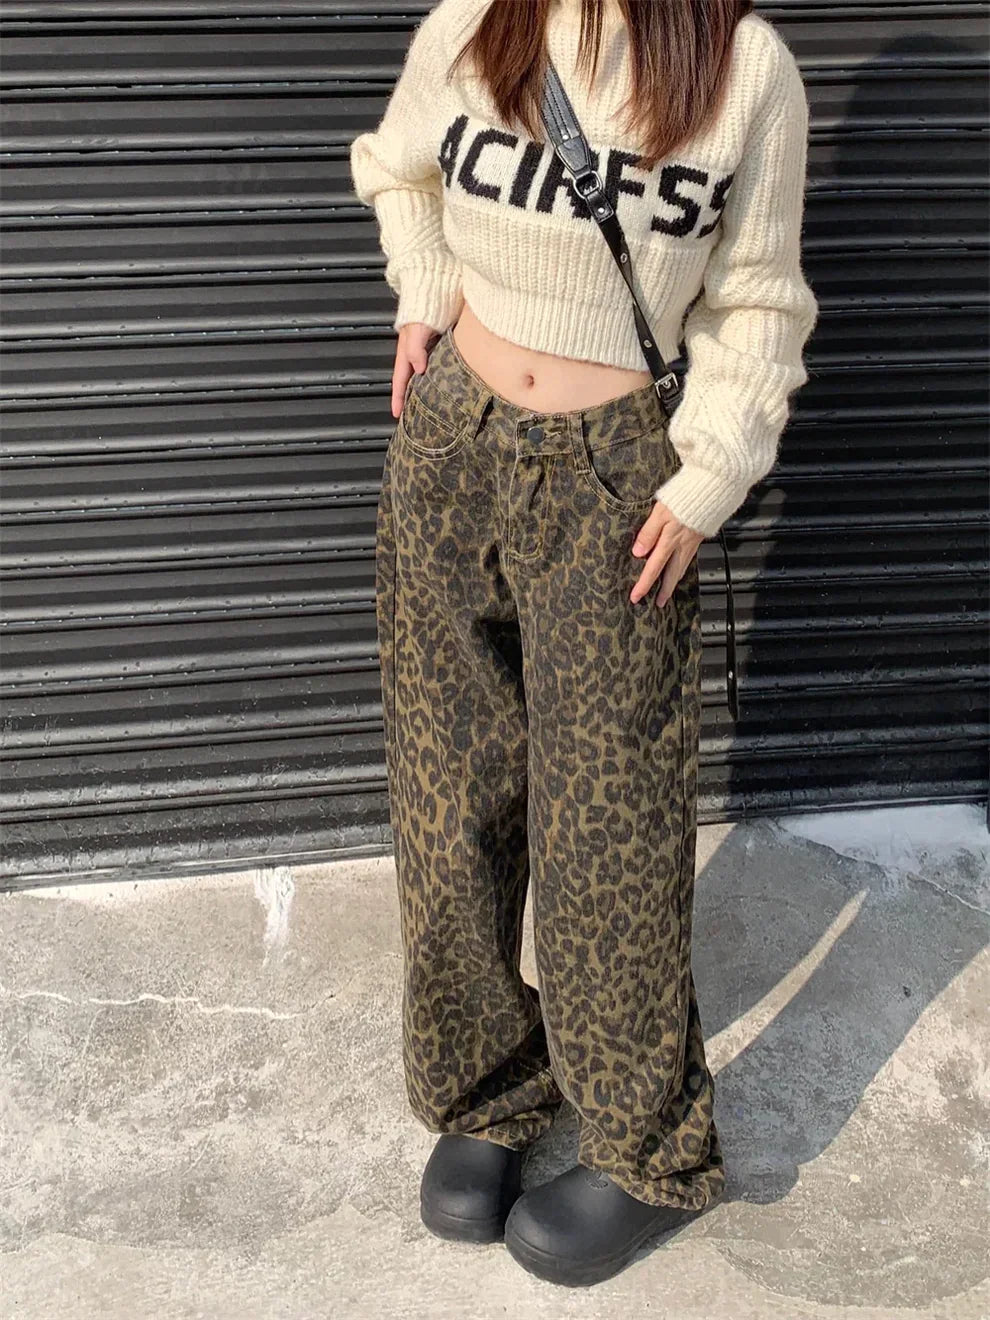 Jenna - Leopard Print Jeans